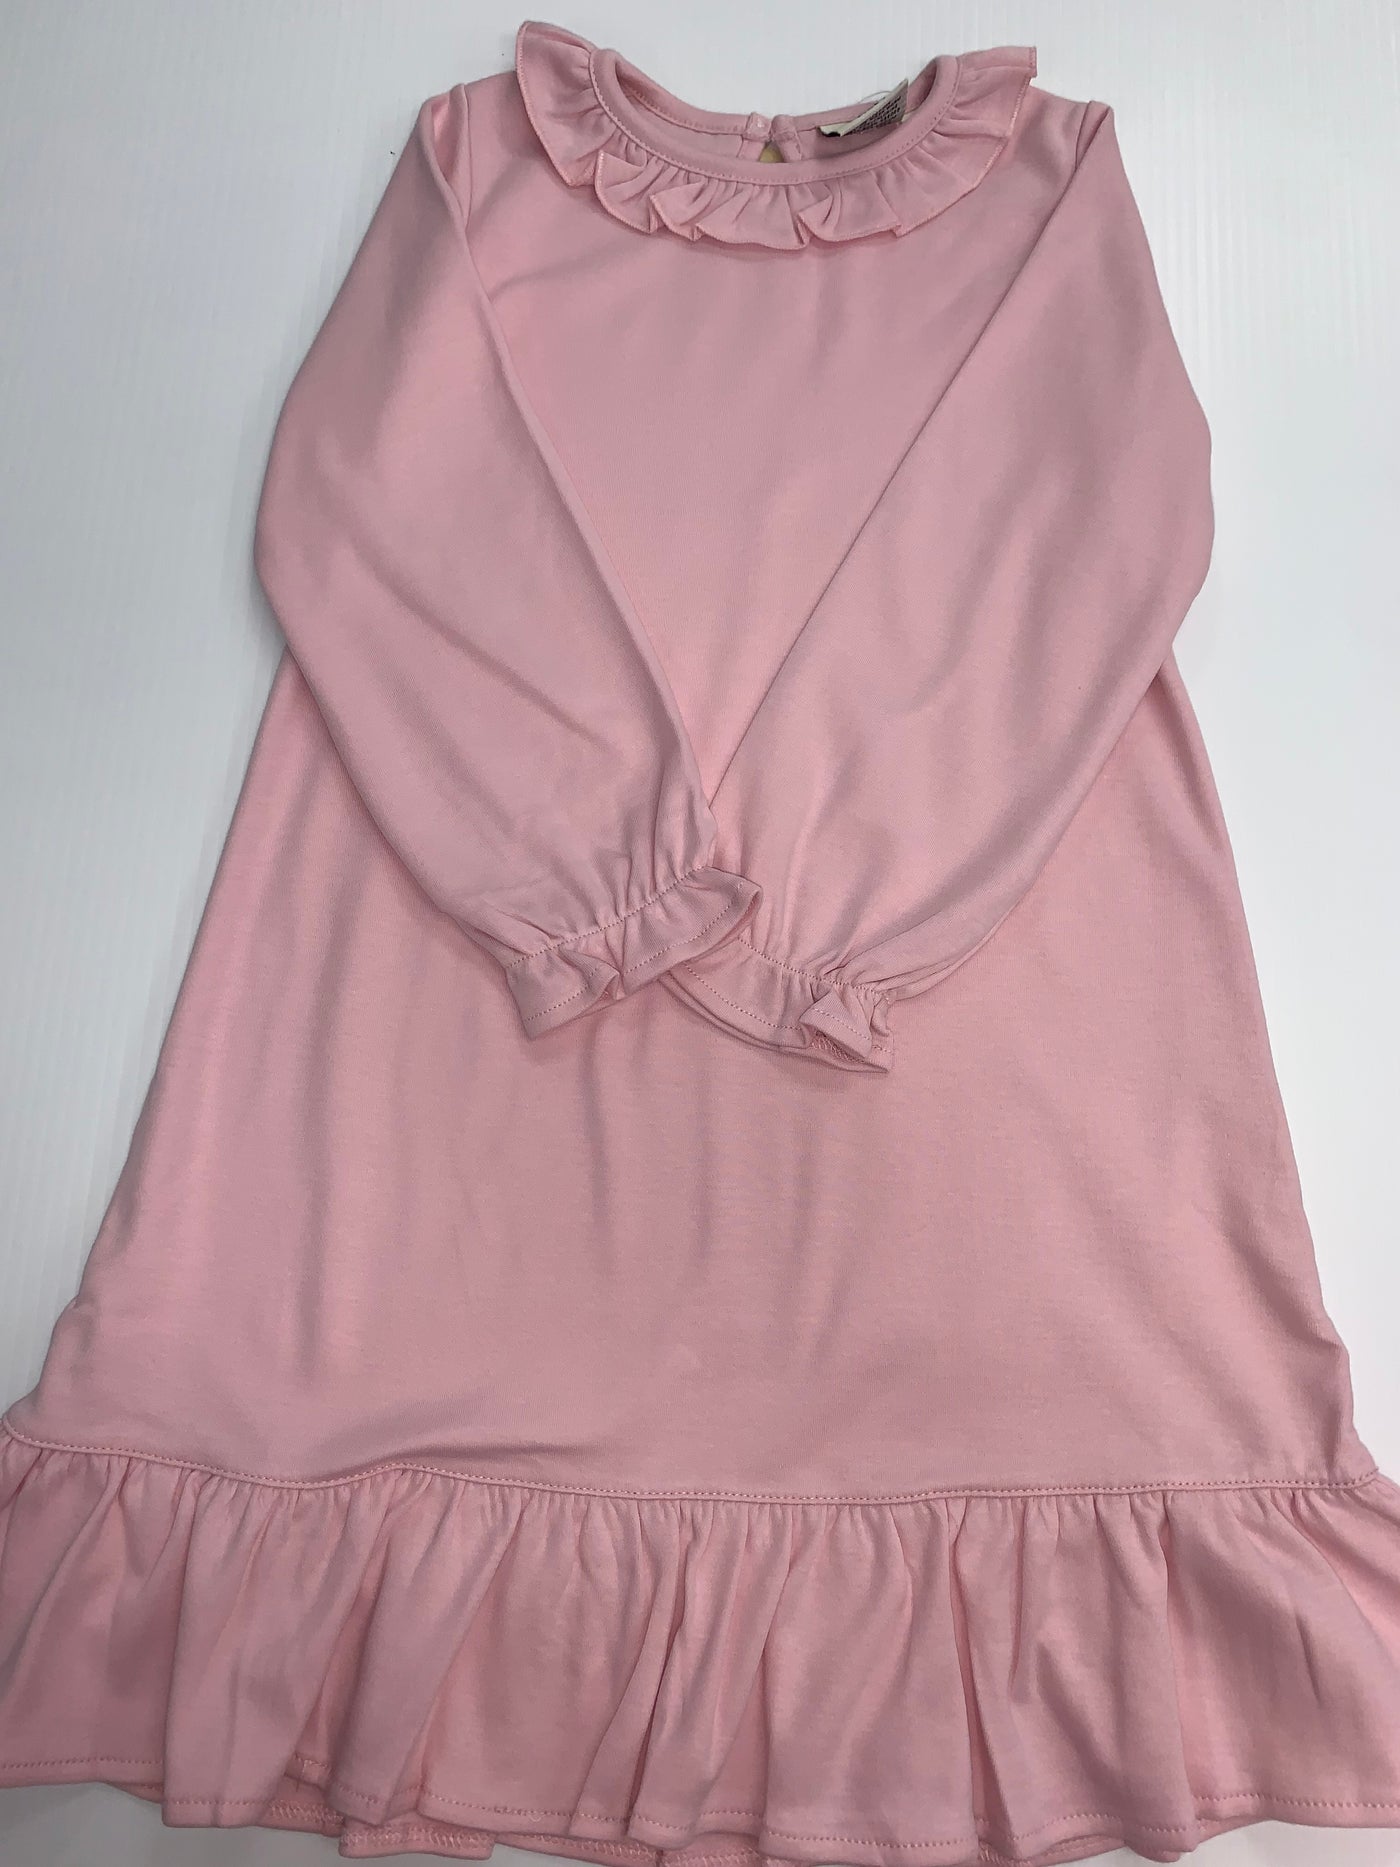 Light pink ruffle dress